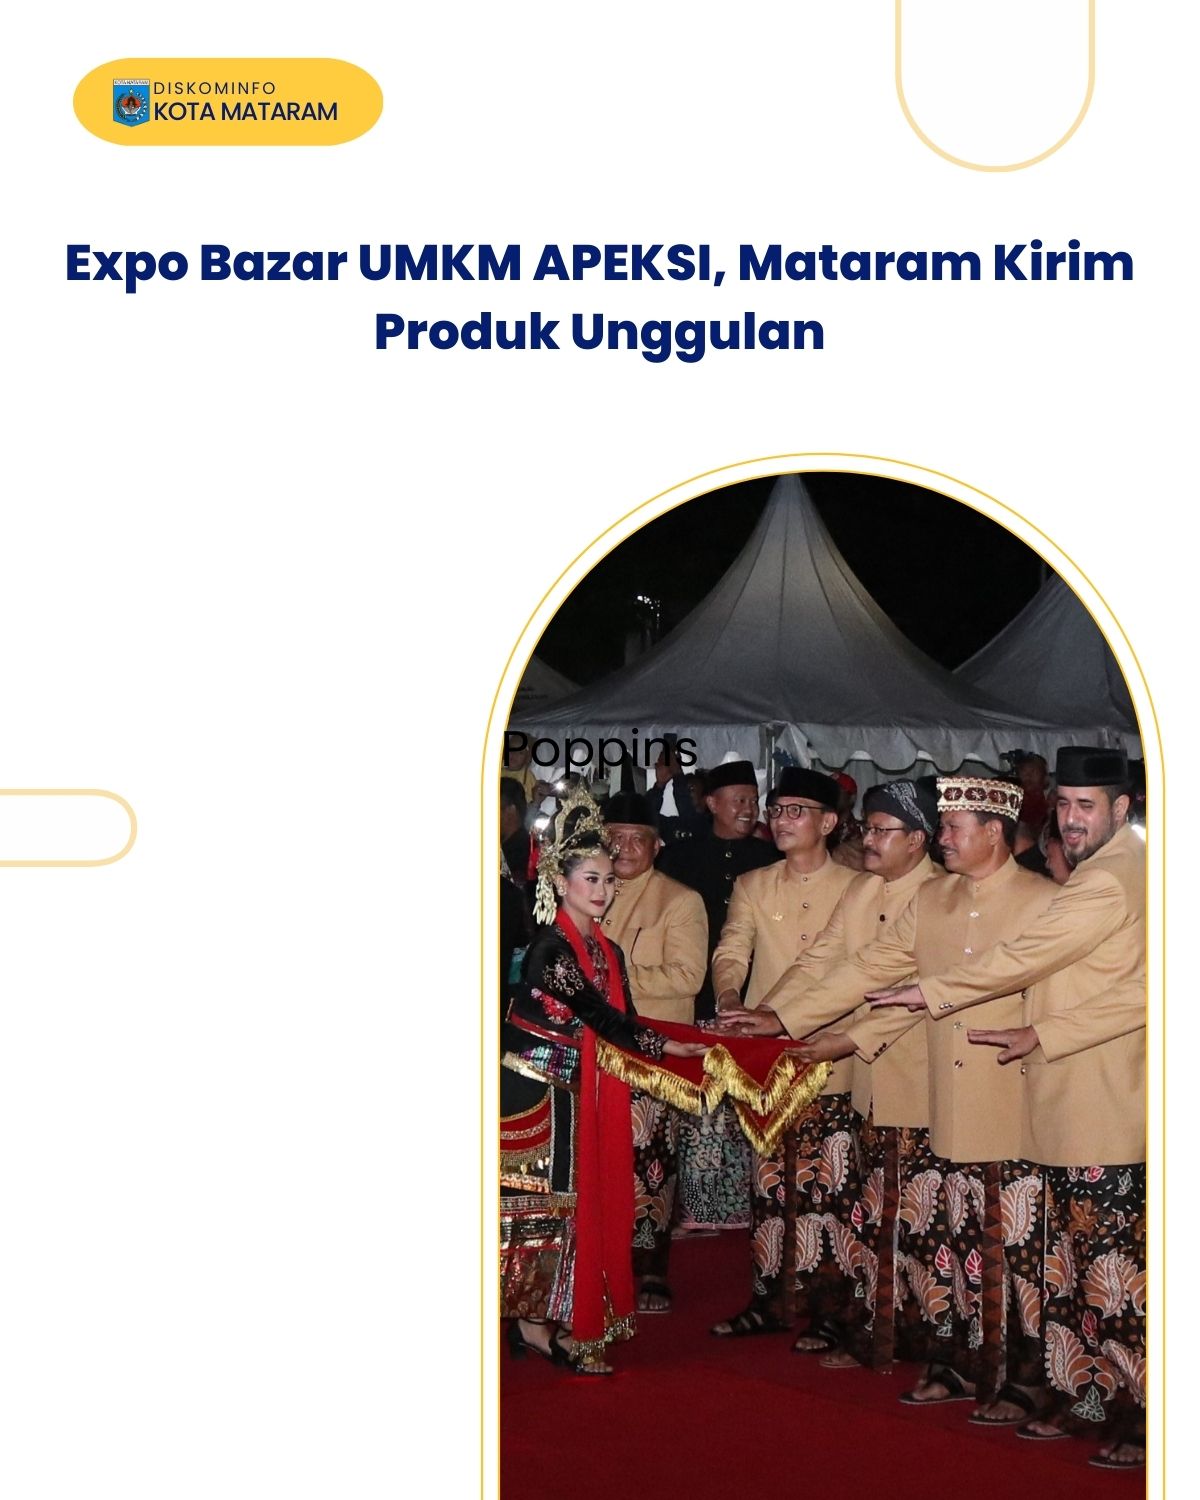 Expo Bazar UMKM APEKSI, Mataram Kirim Produk Unggulan